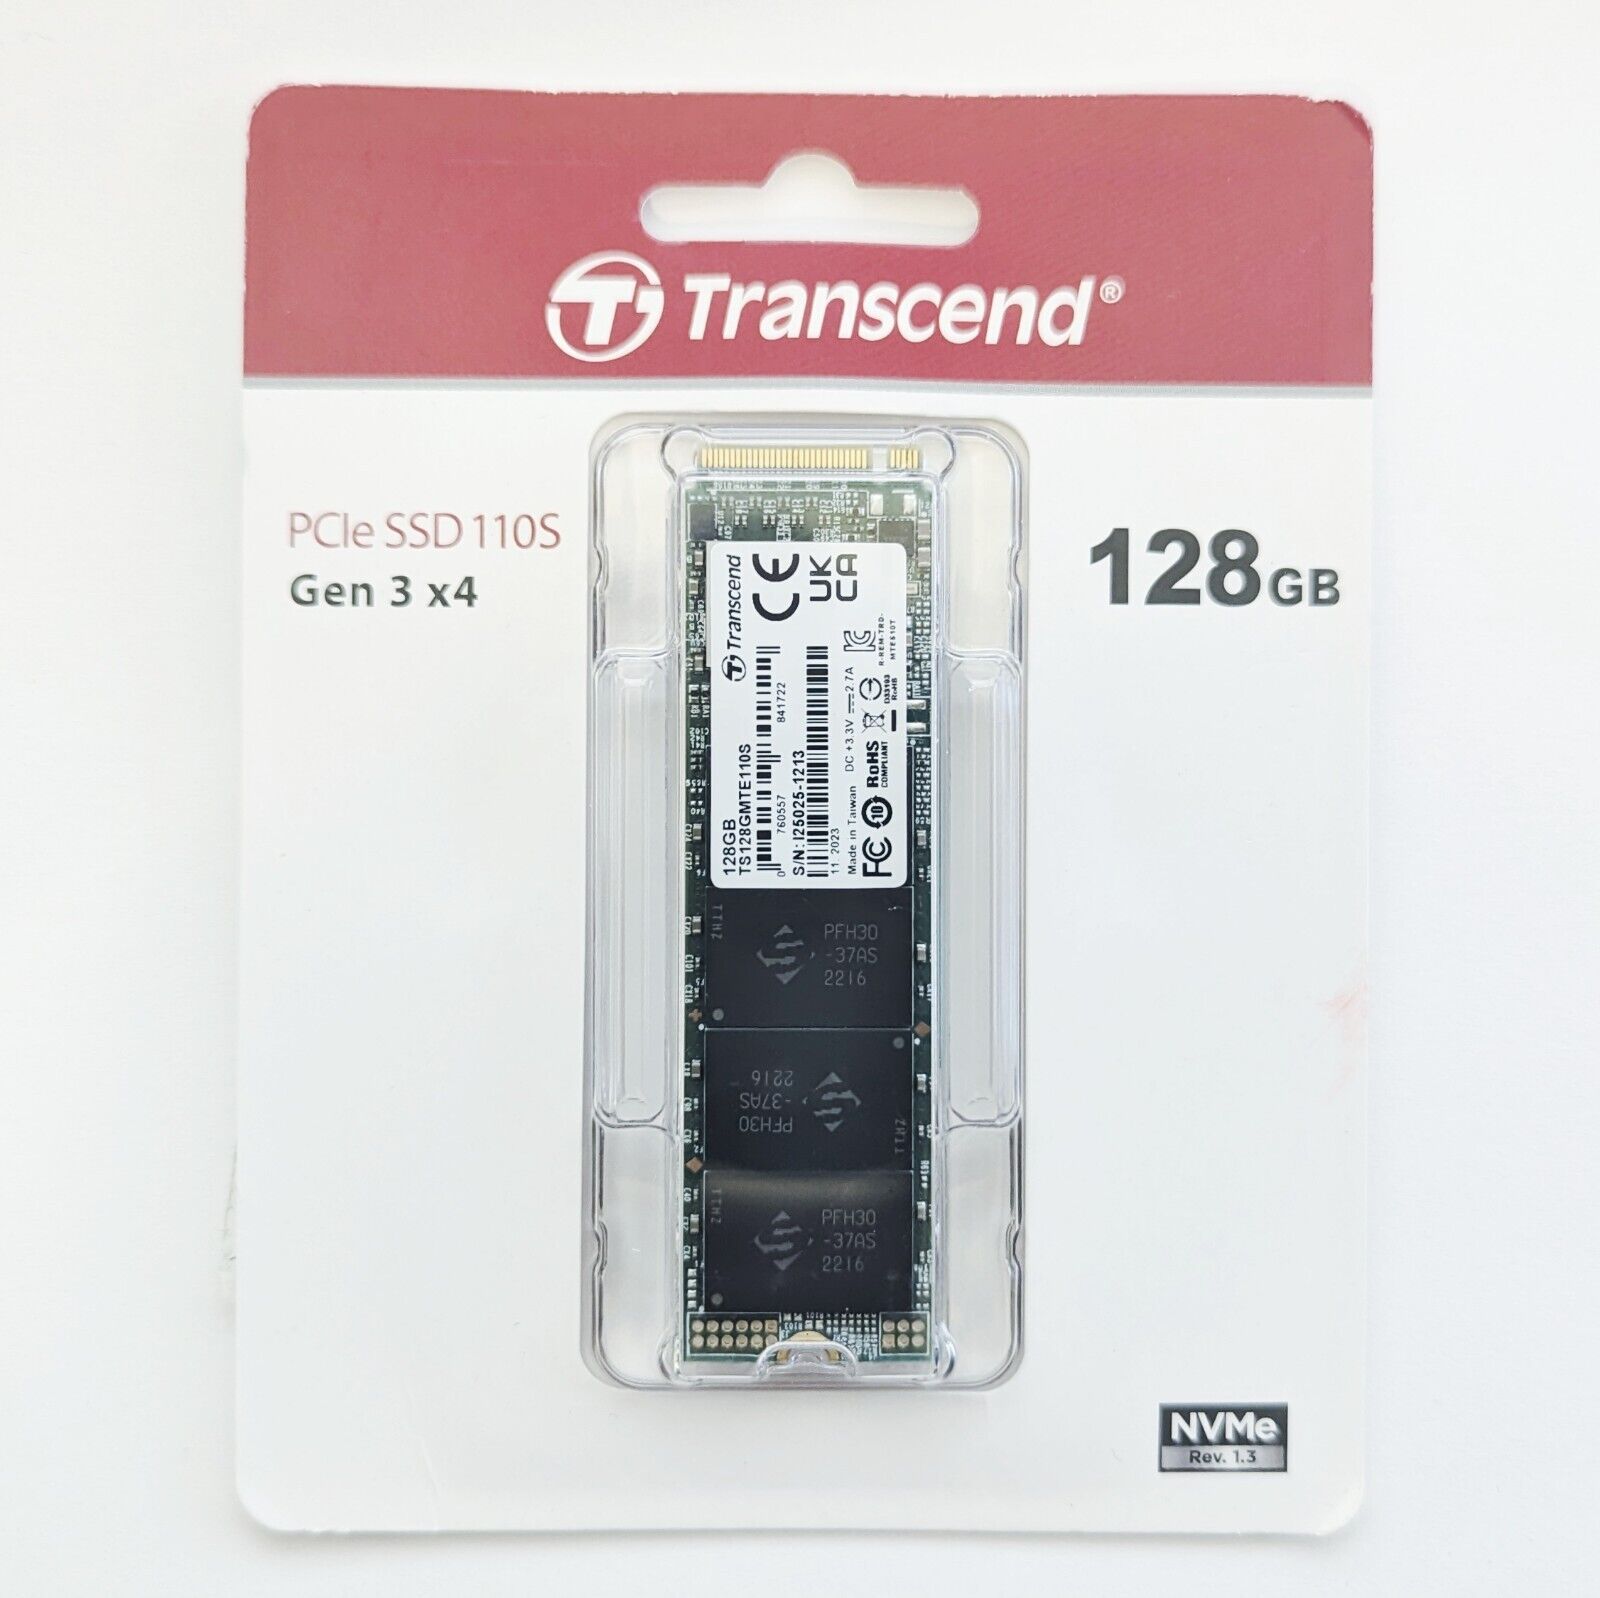 Transcend PCIe SSD 110S • 128GB • Gen 3, x4, NVMe • Brand New, Sealed